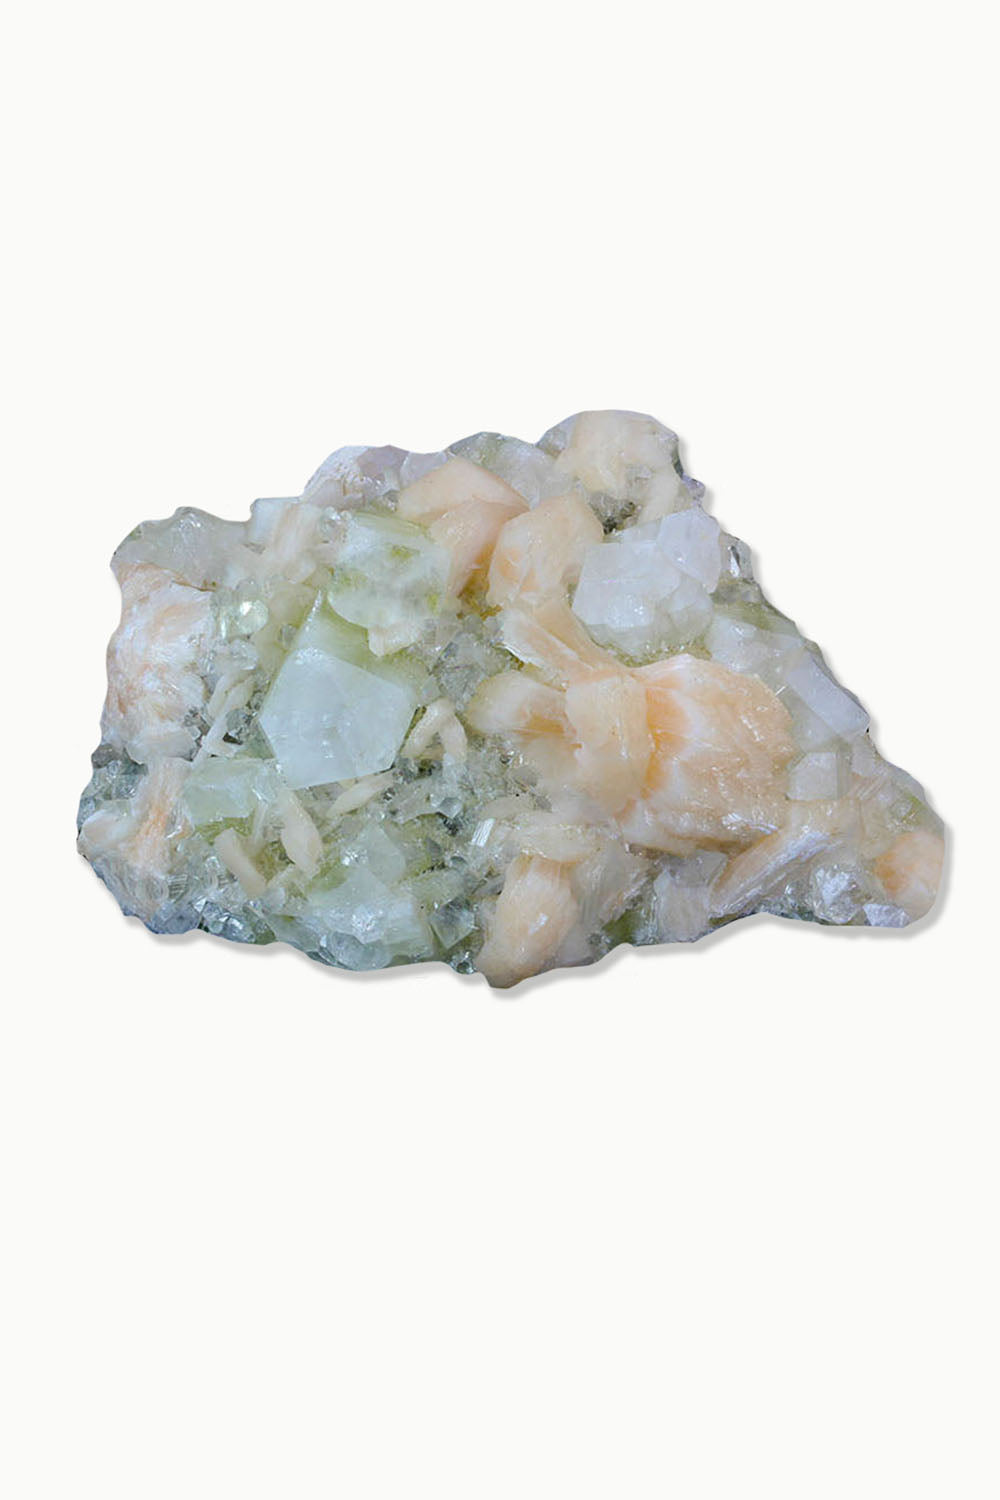 Peach Stilbite Apophyllite Crystal Cluster #2